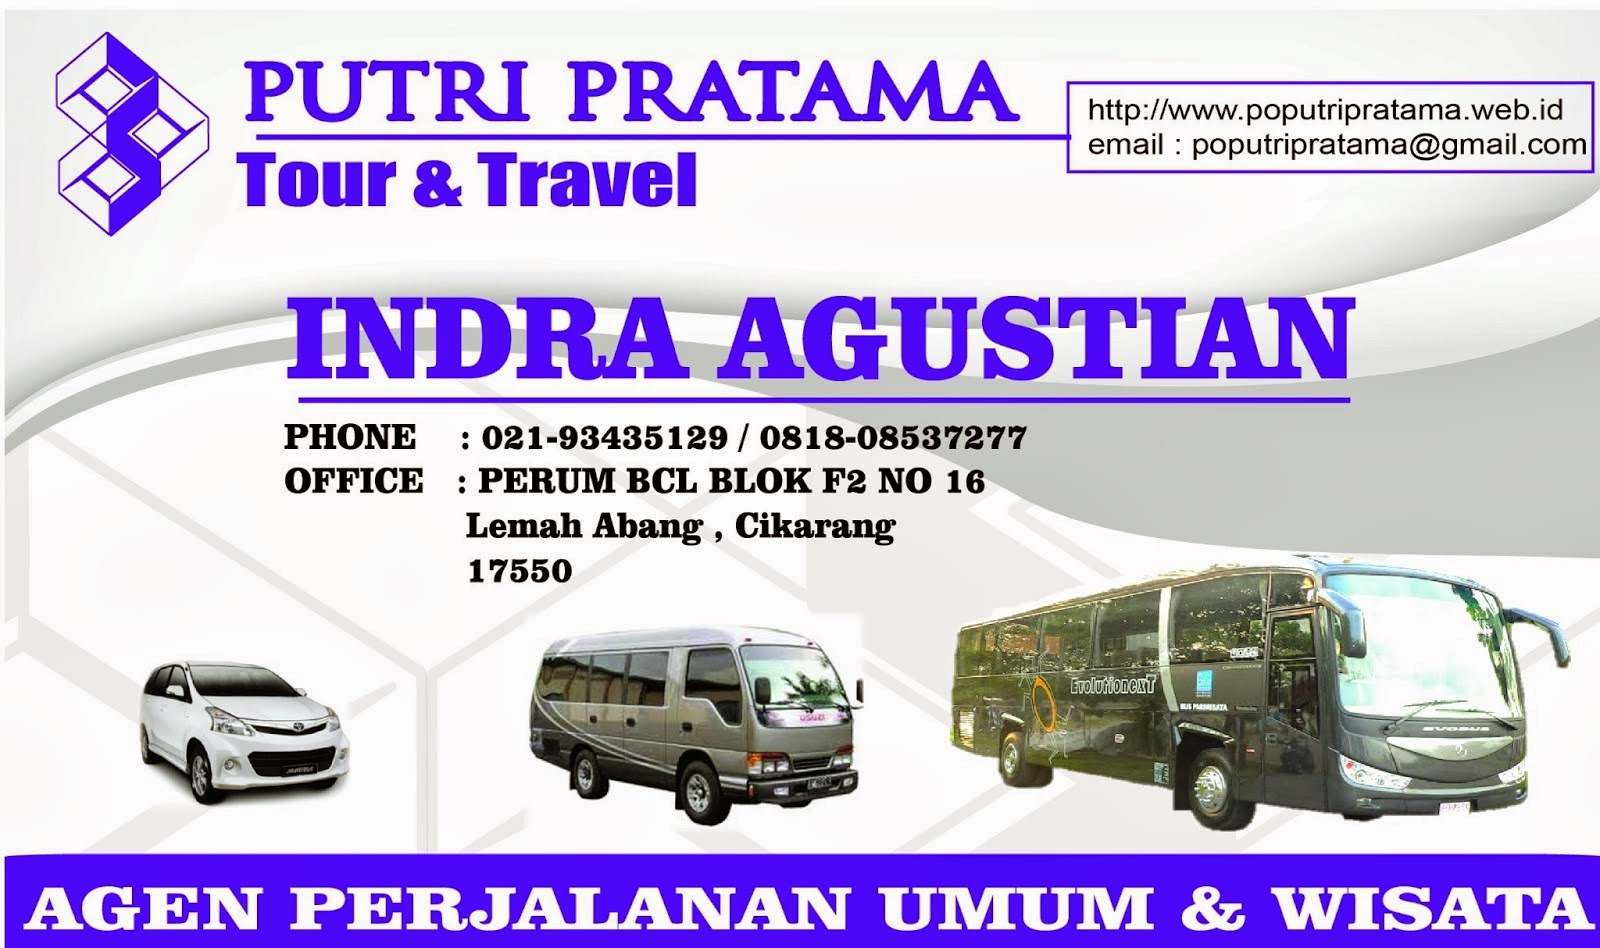 Putri Pratama Tour amp; Travel